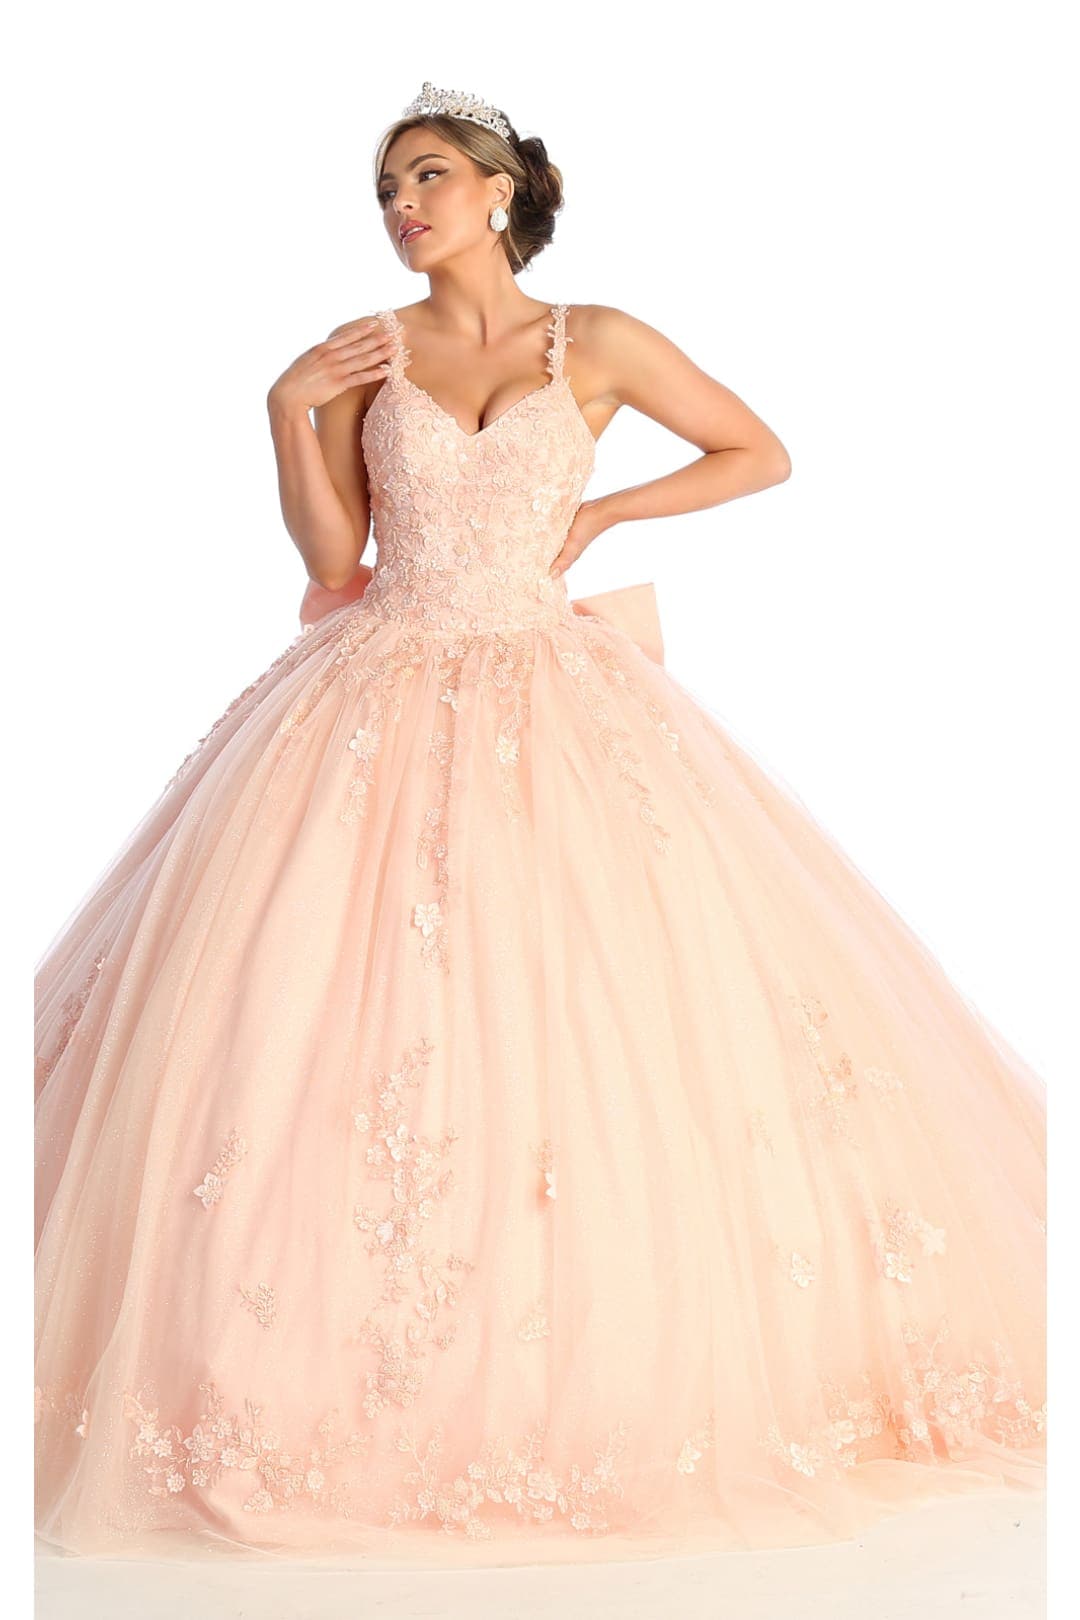 Layla K Sleeveless Corset Sweet 16 Ball Gown LK174 | FormalDressShops